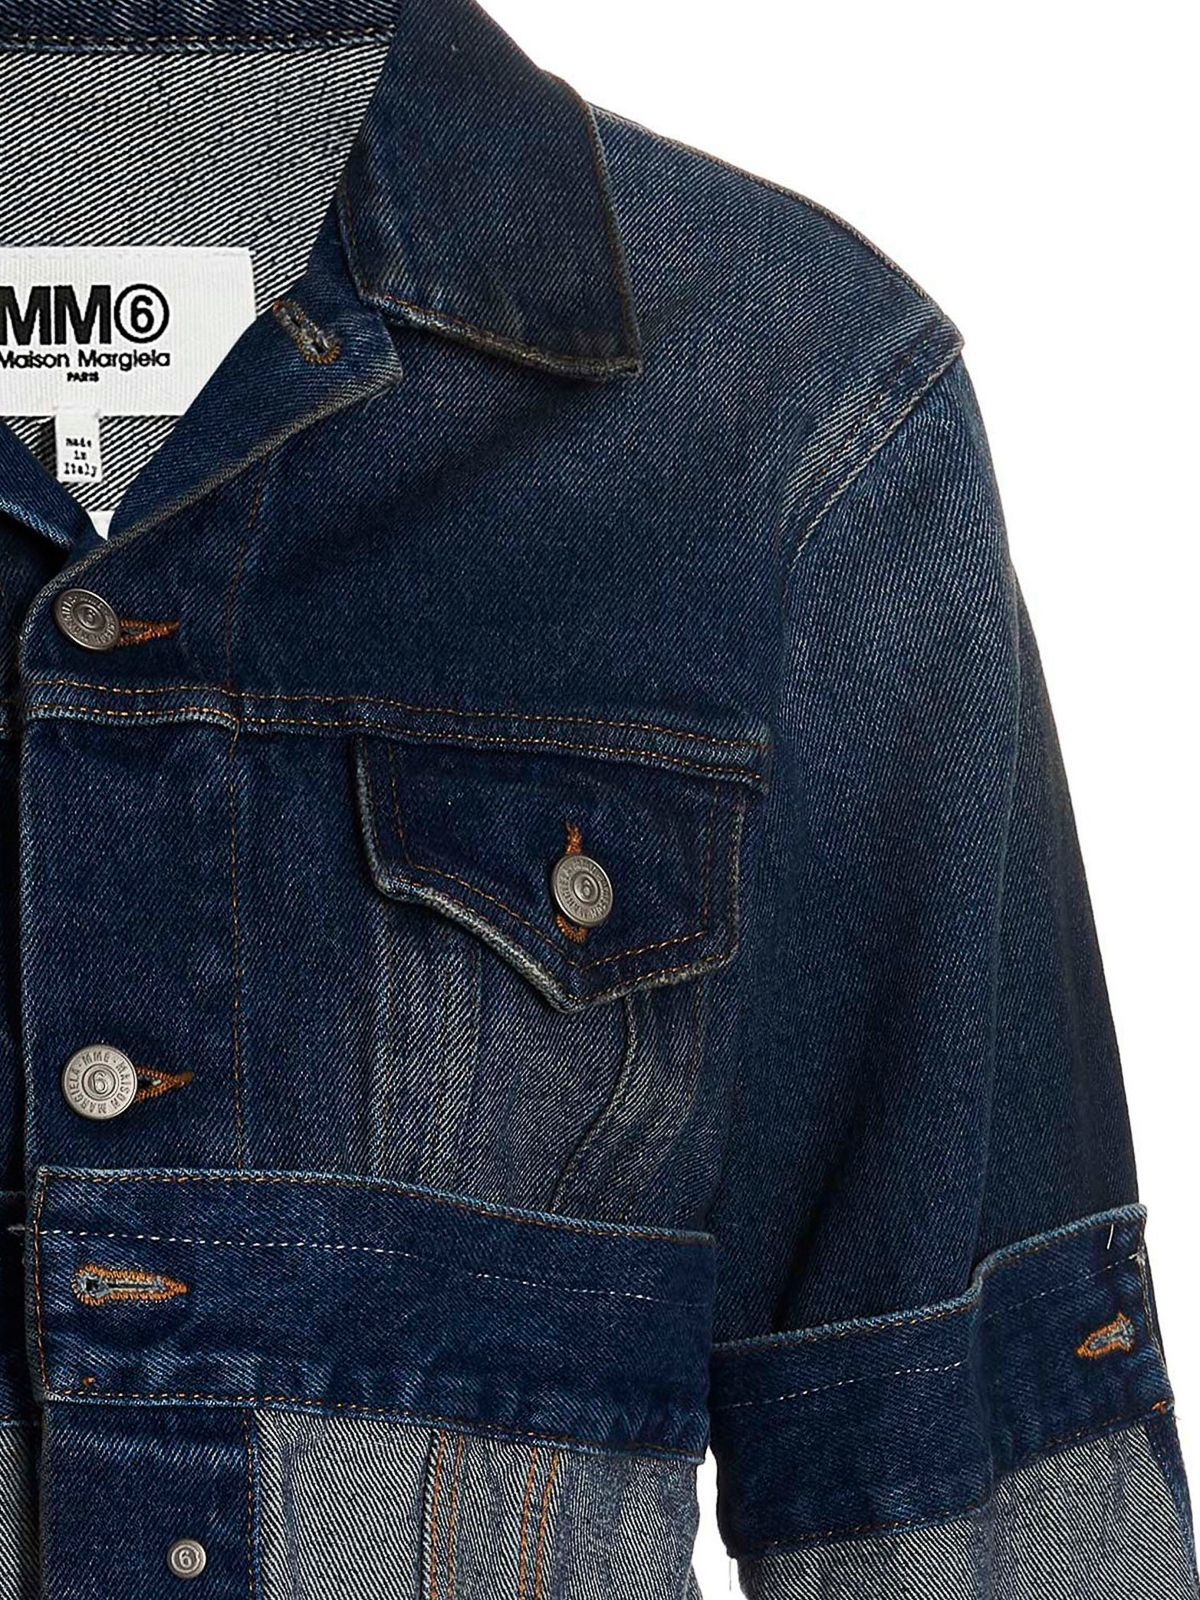 Denim jacket MM6 Maison Margiela - Patchwork denim jacket 